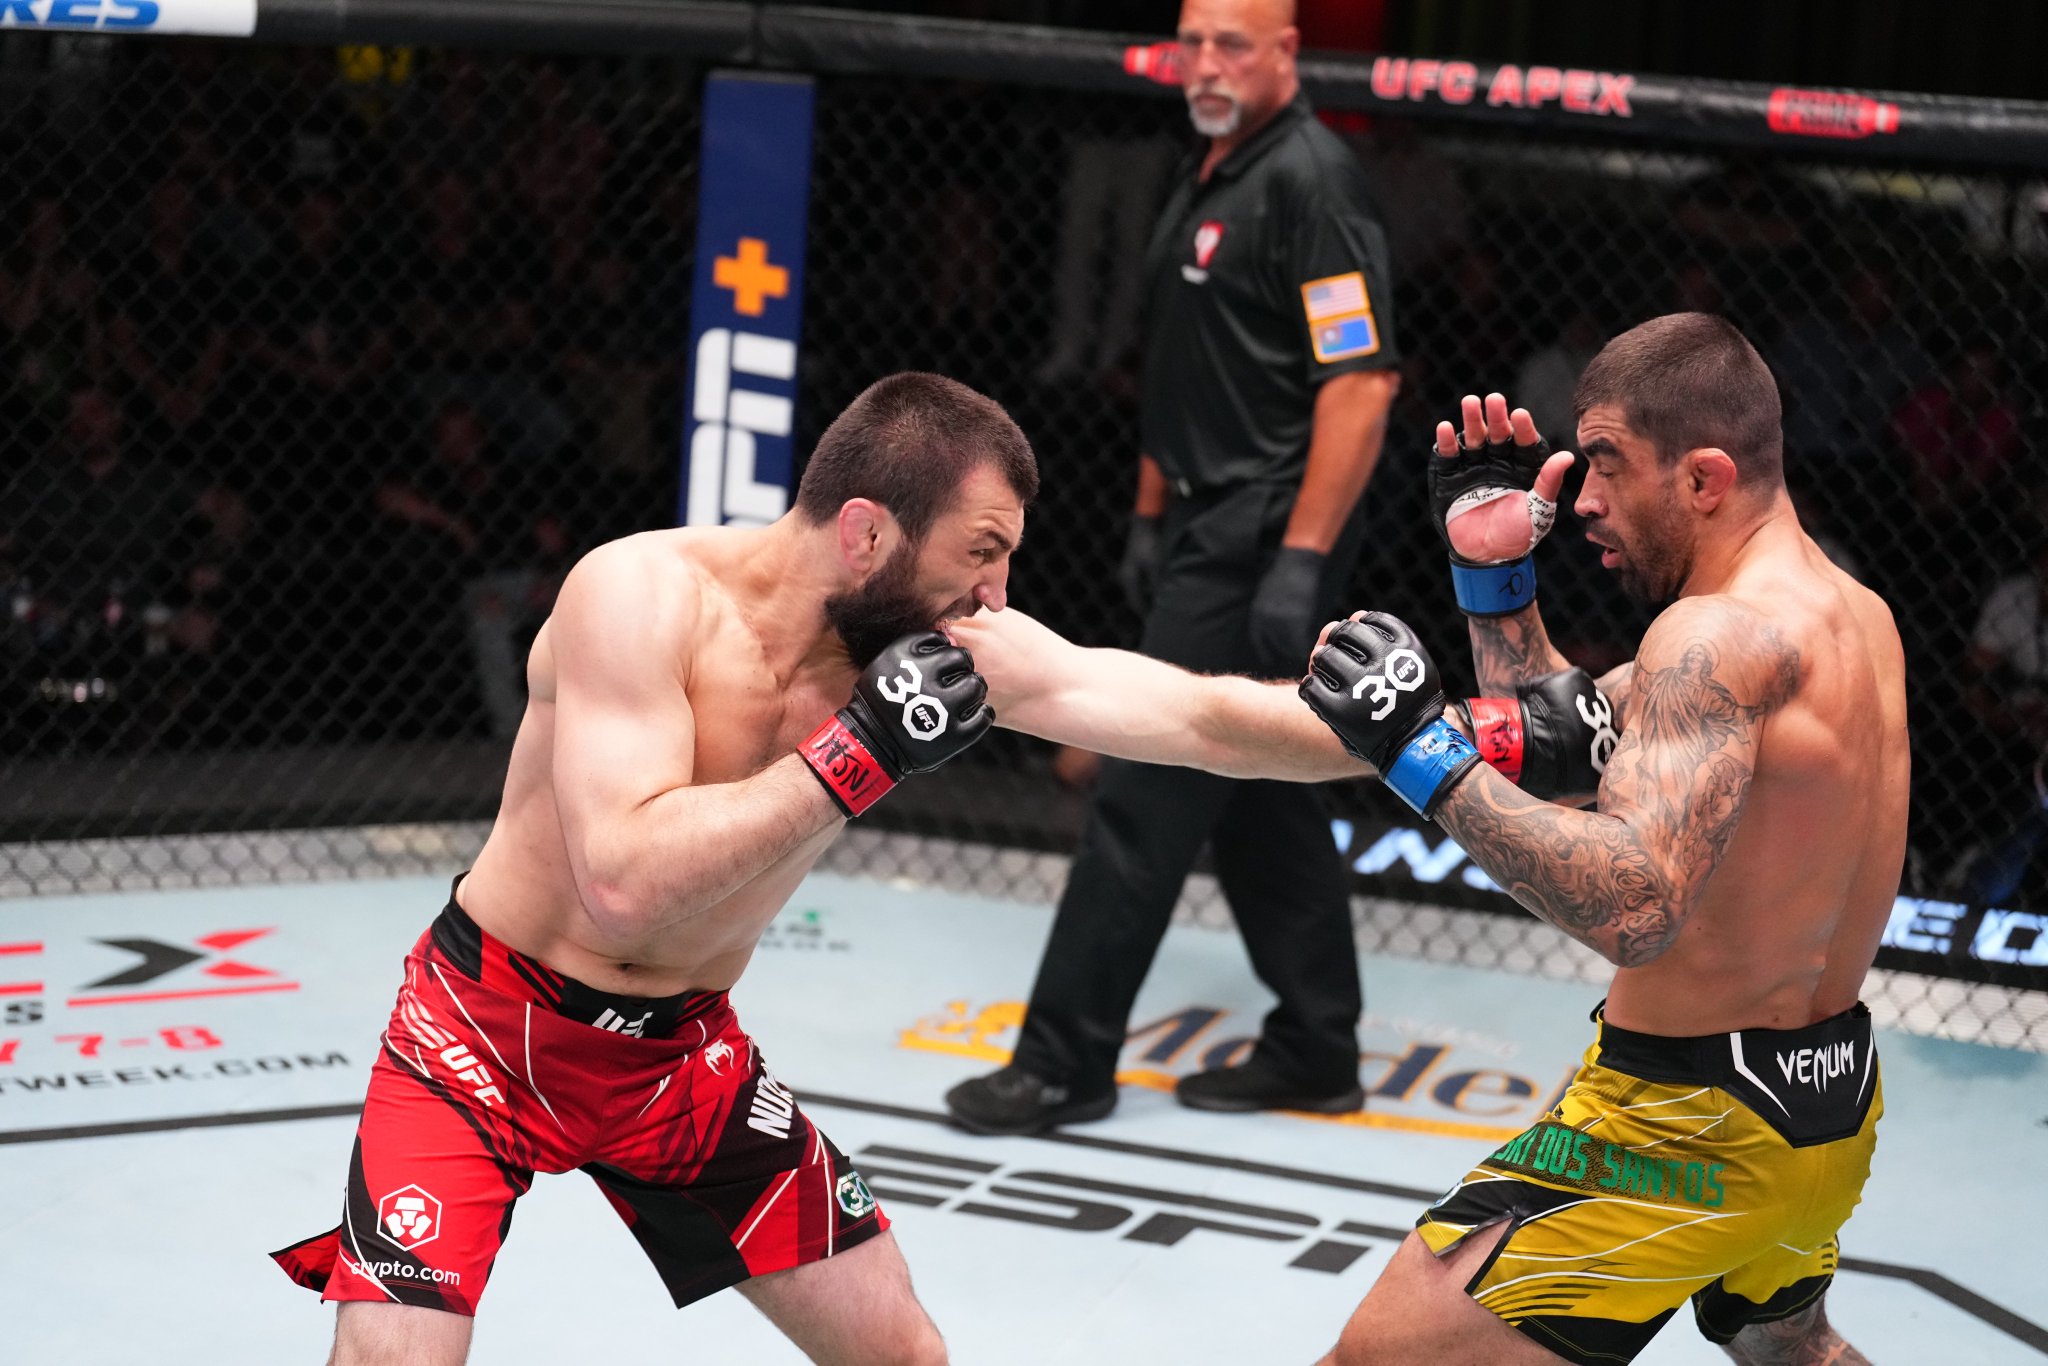 UFC Vegas 74 - Elizeu Zaleski vs Abubakar Nurmagomedov